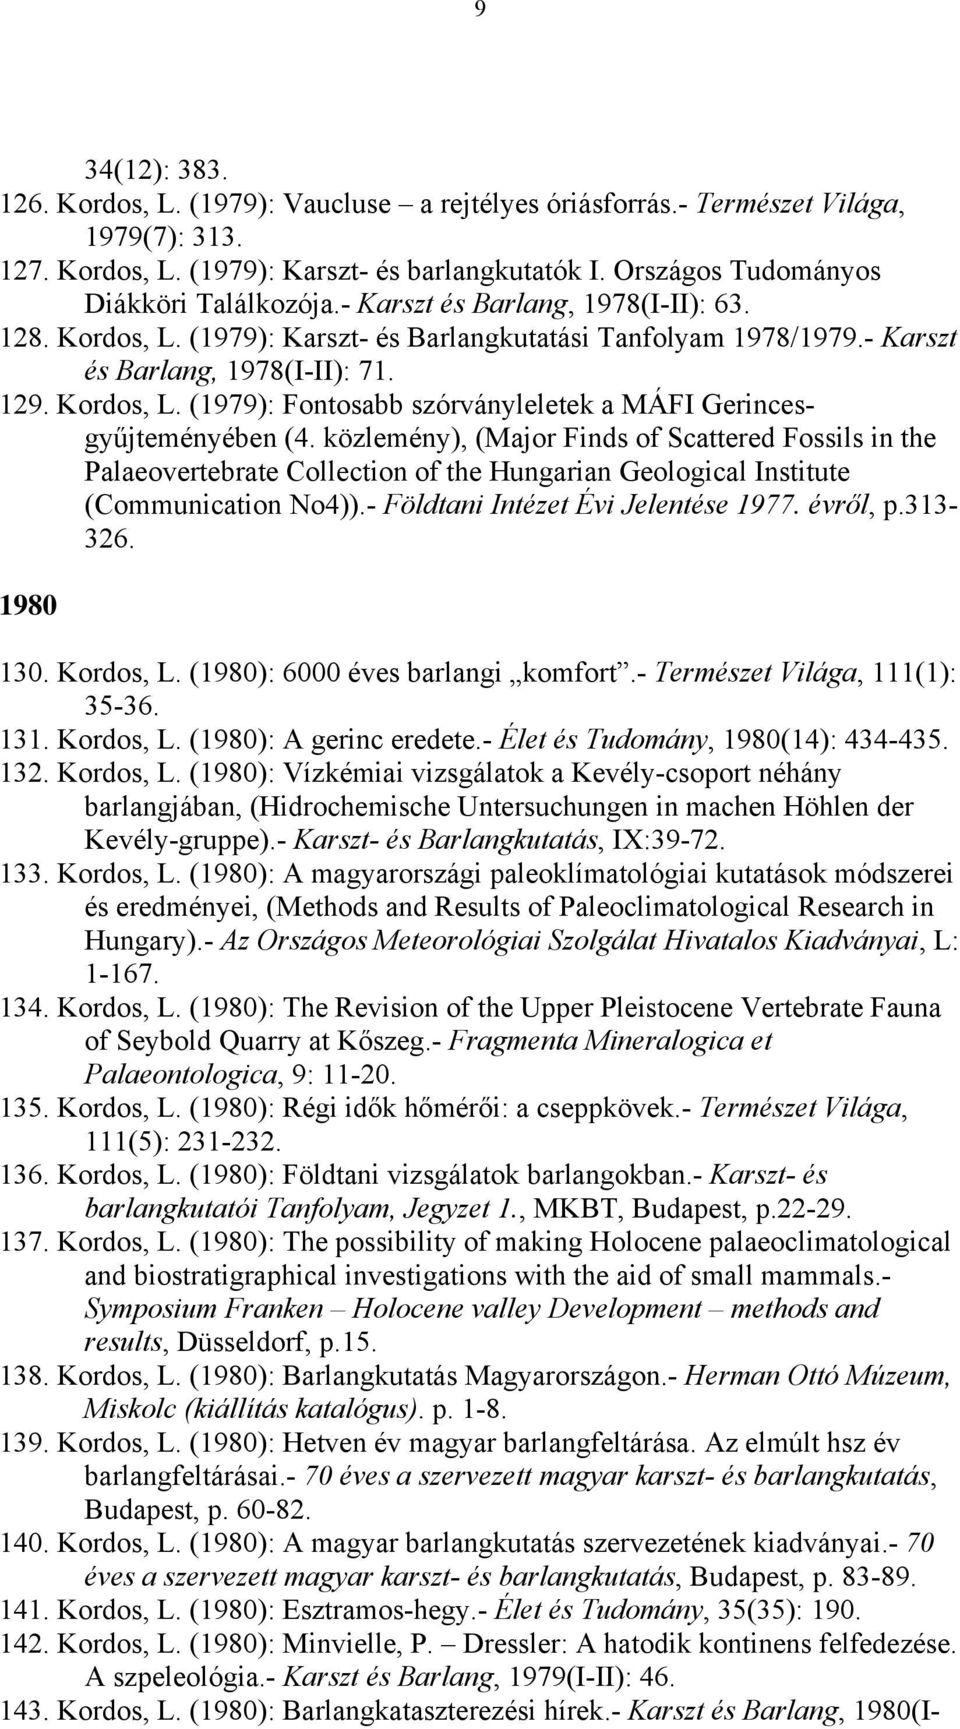 közlemény), (Major Finds of Scattered Fossils in the Palaeovertebrate Collection of the Hungarian Geological Institute (Communication No4)).- Földtani Intézet Évi Jelentése 1977. évről, p.313-326.